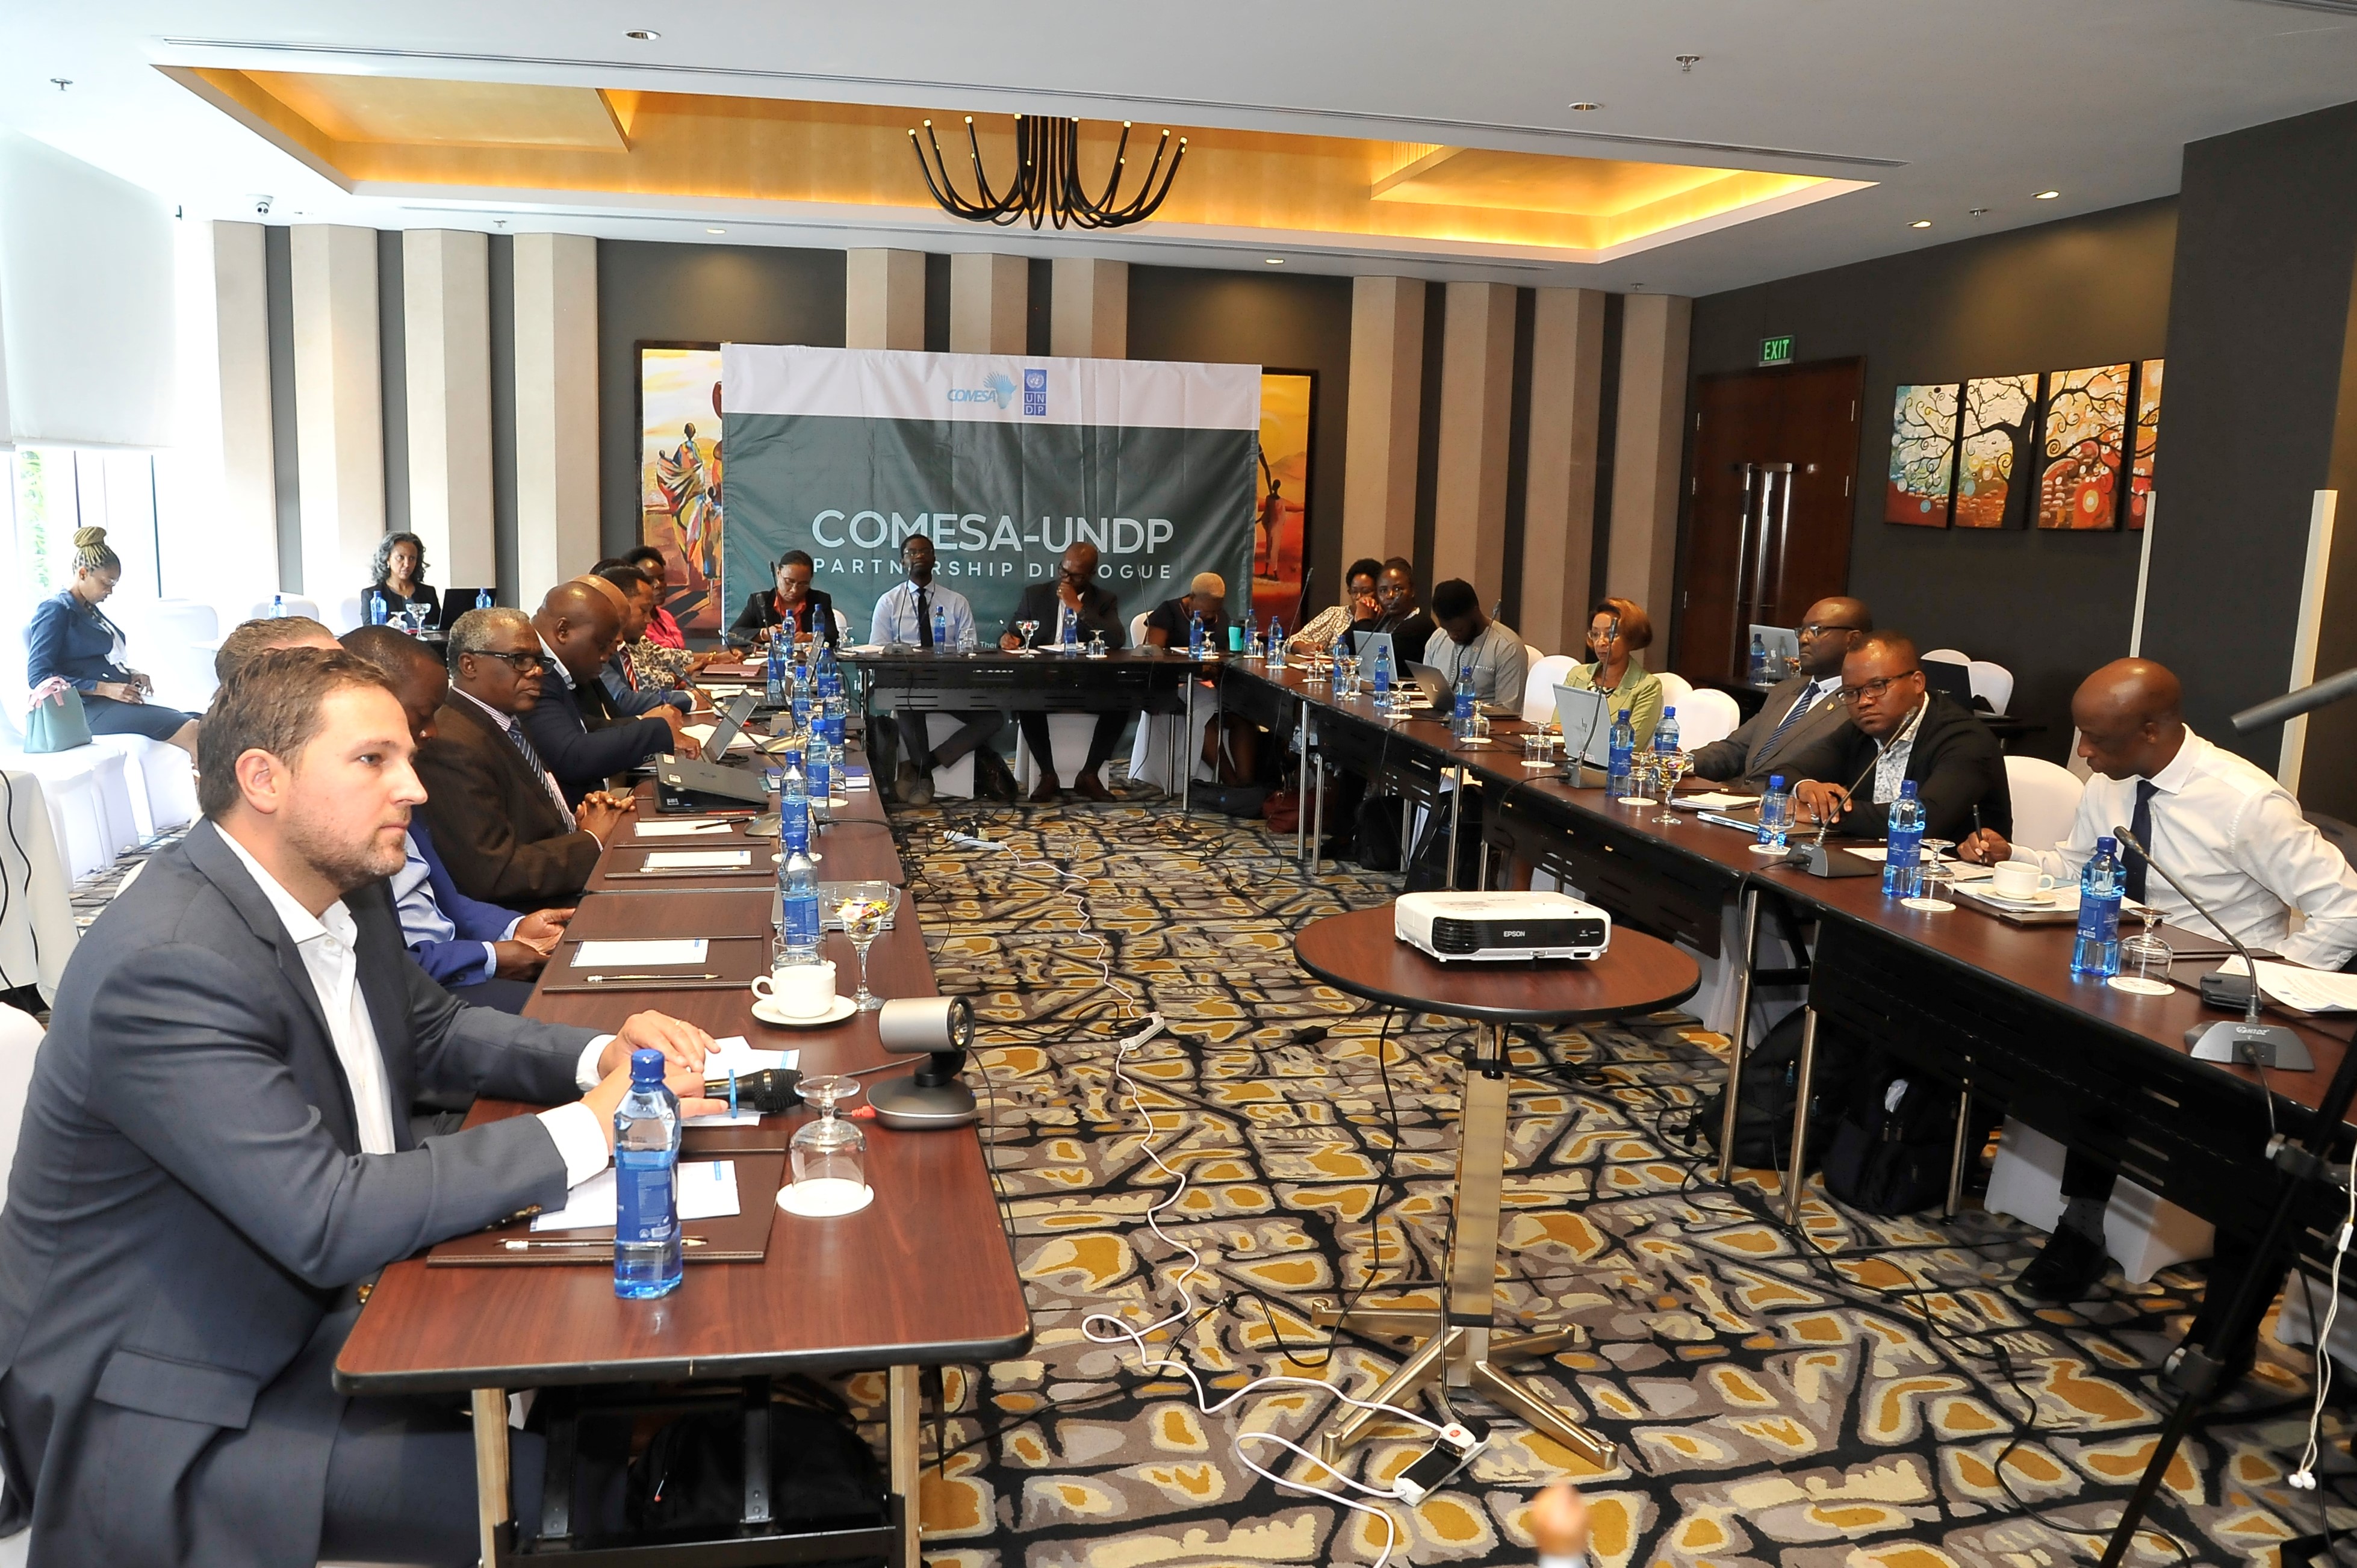 Participants at the COMESA-UNDP Partnerships Dialogue